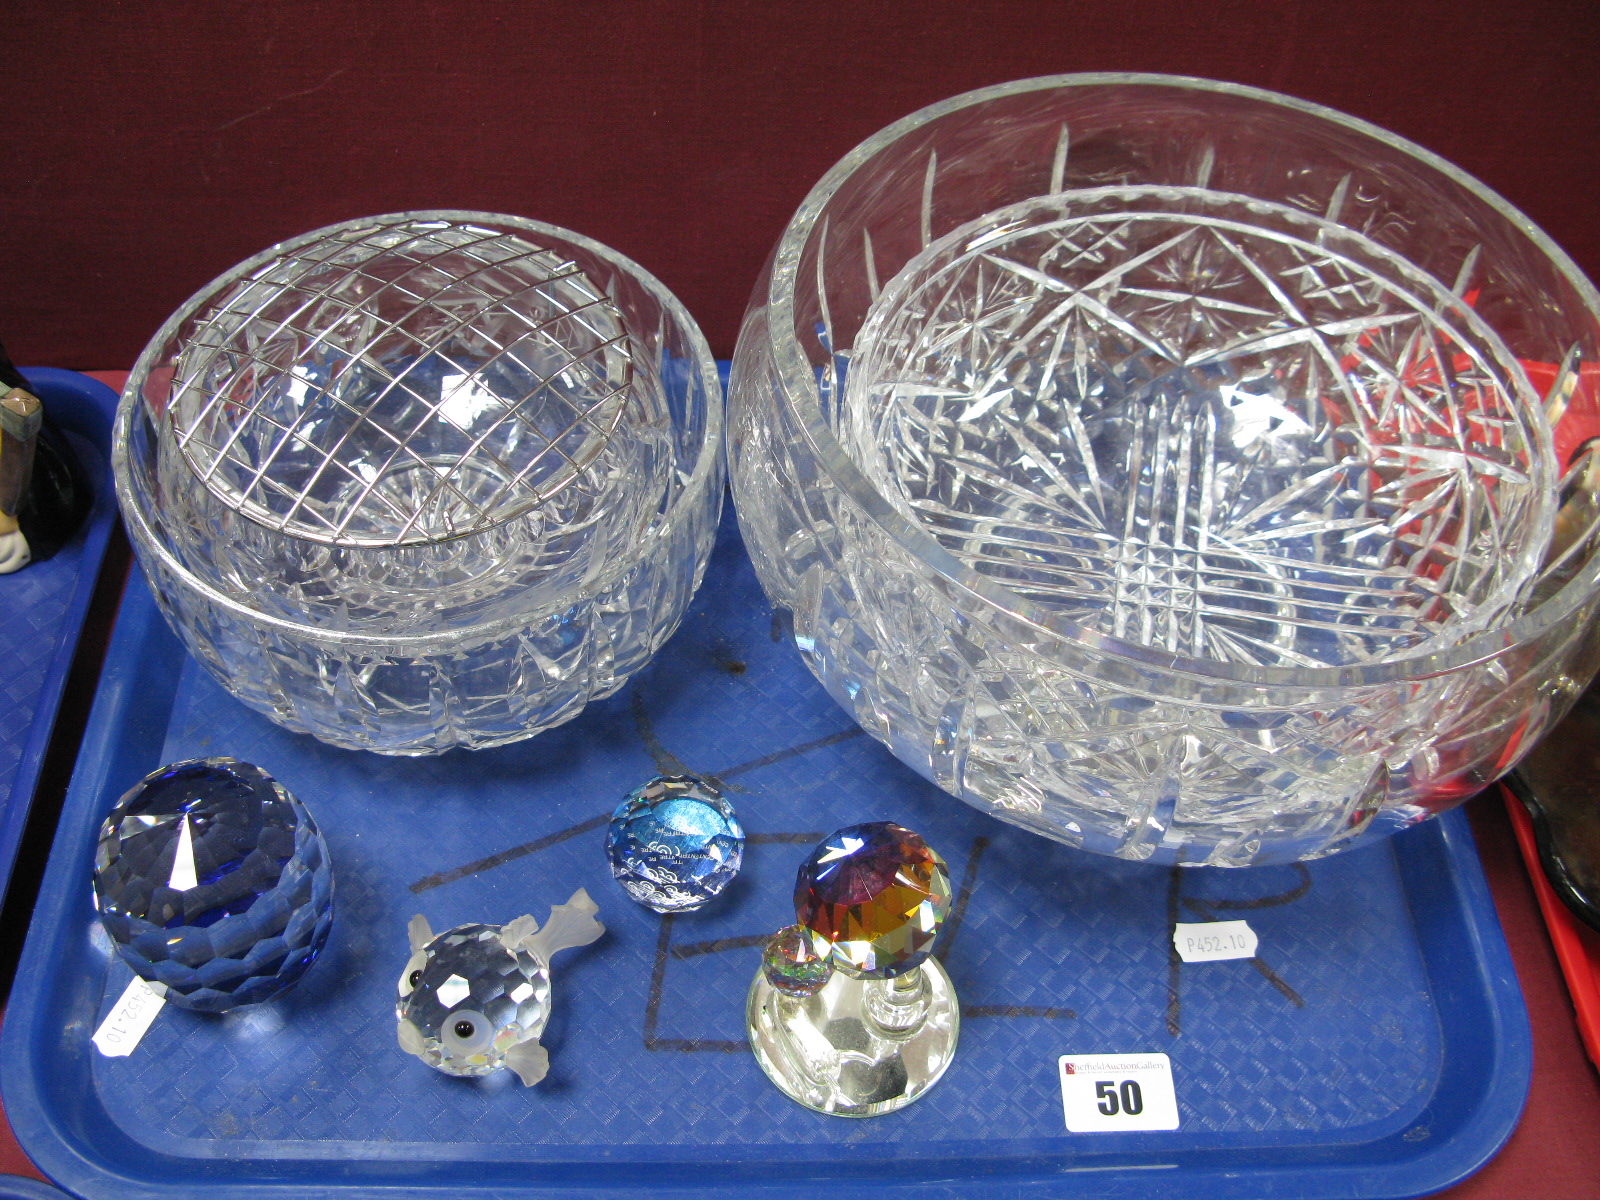 A Swarovski Globular Weight, Swarovski Puffer Fish, lead crystal bowls, rose bowl etc:- One Tray